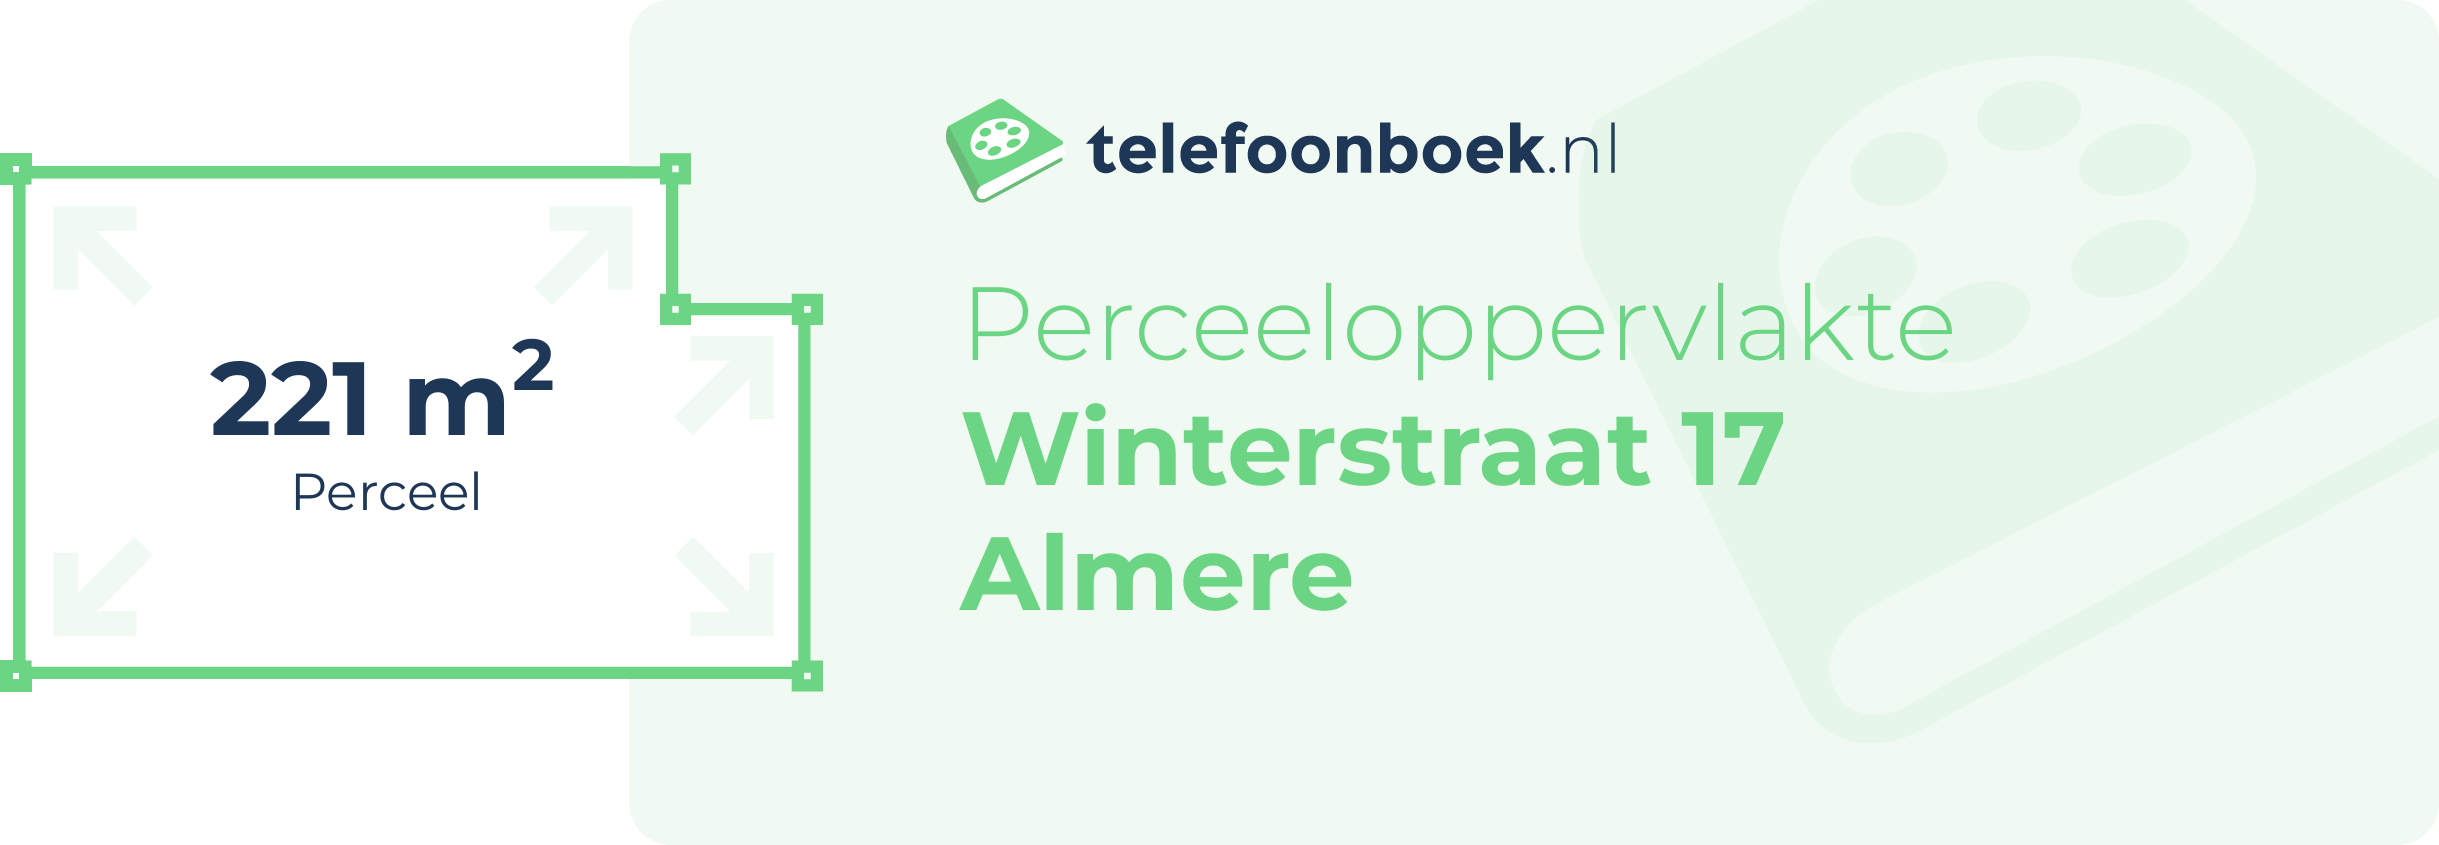 Perceeloppervlakte Winterstraat 17 Almere